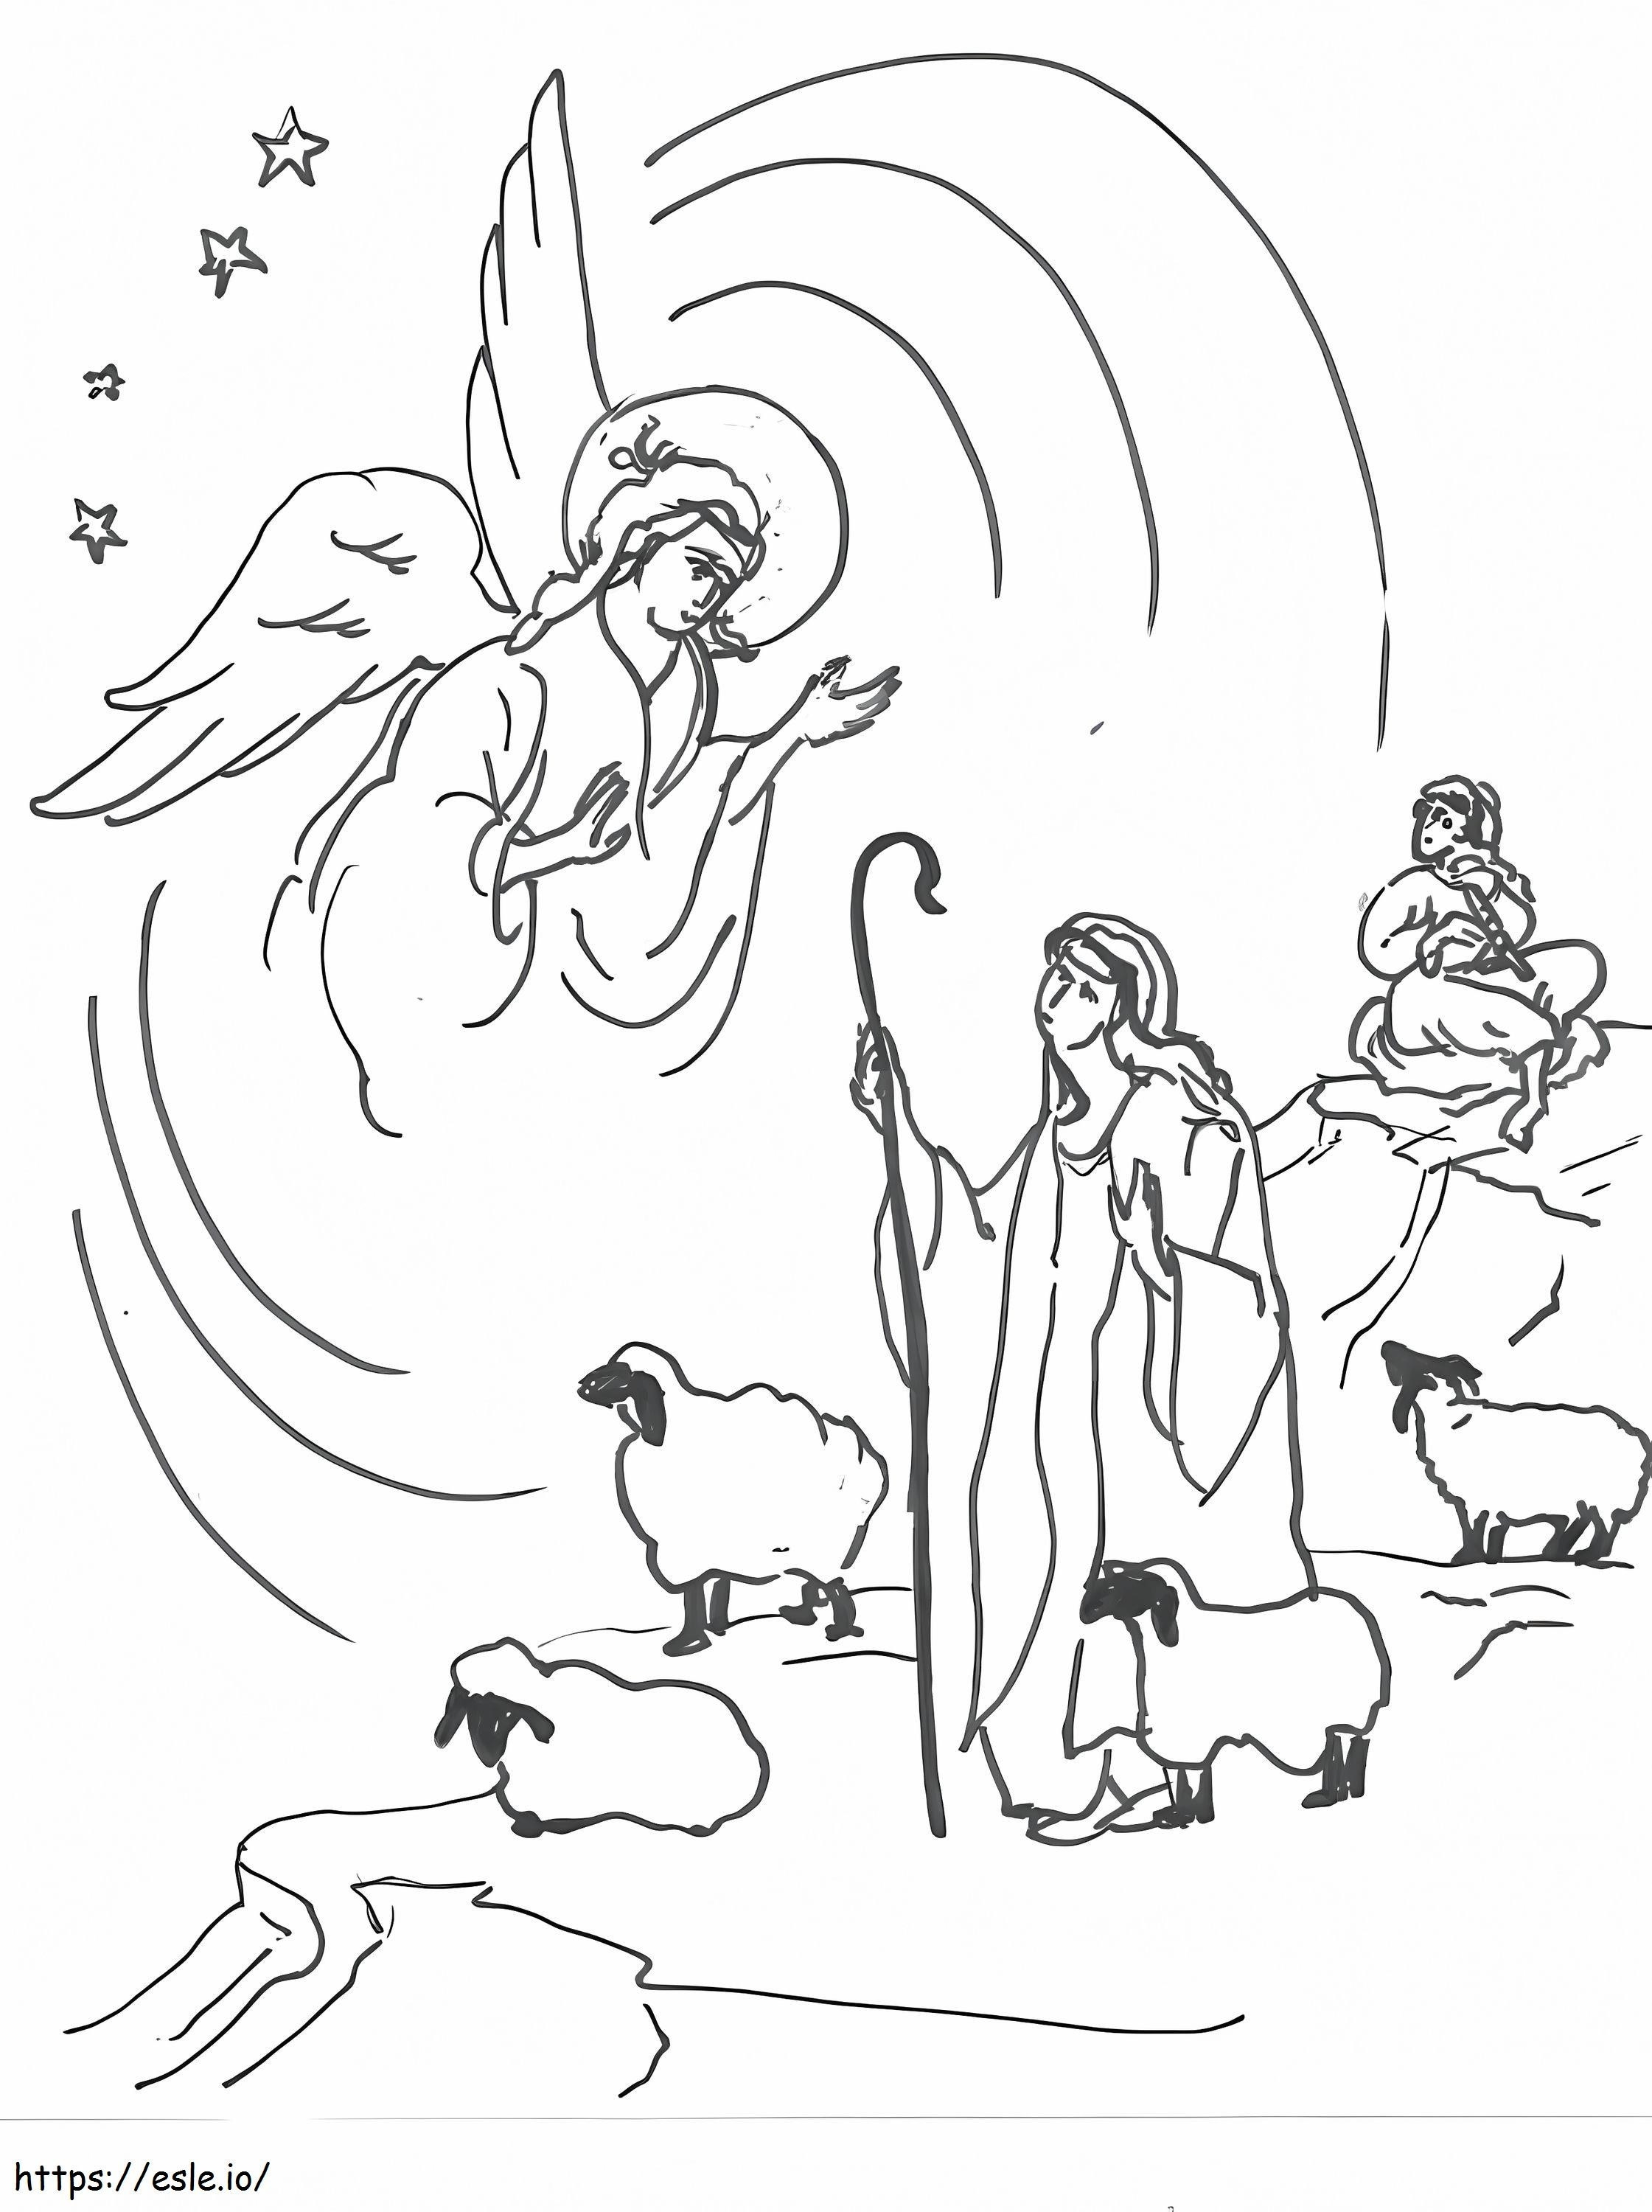 Coloriage Noël orthodoxe 3 à imprimer dessin